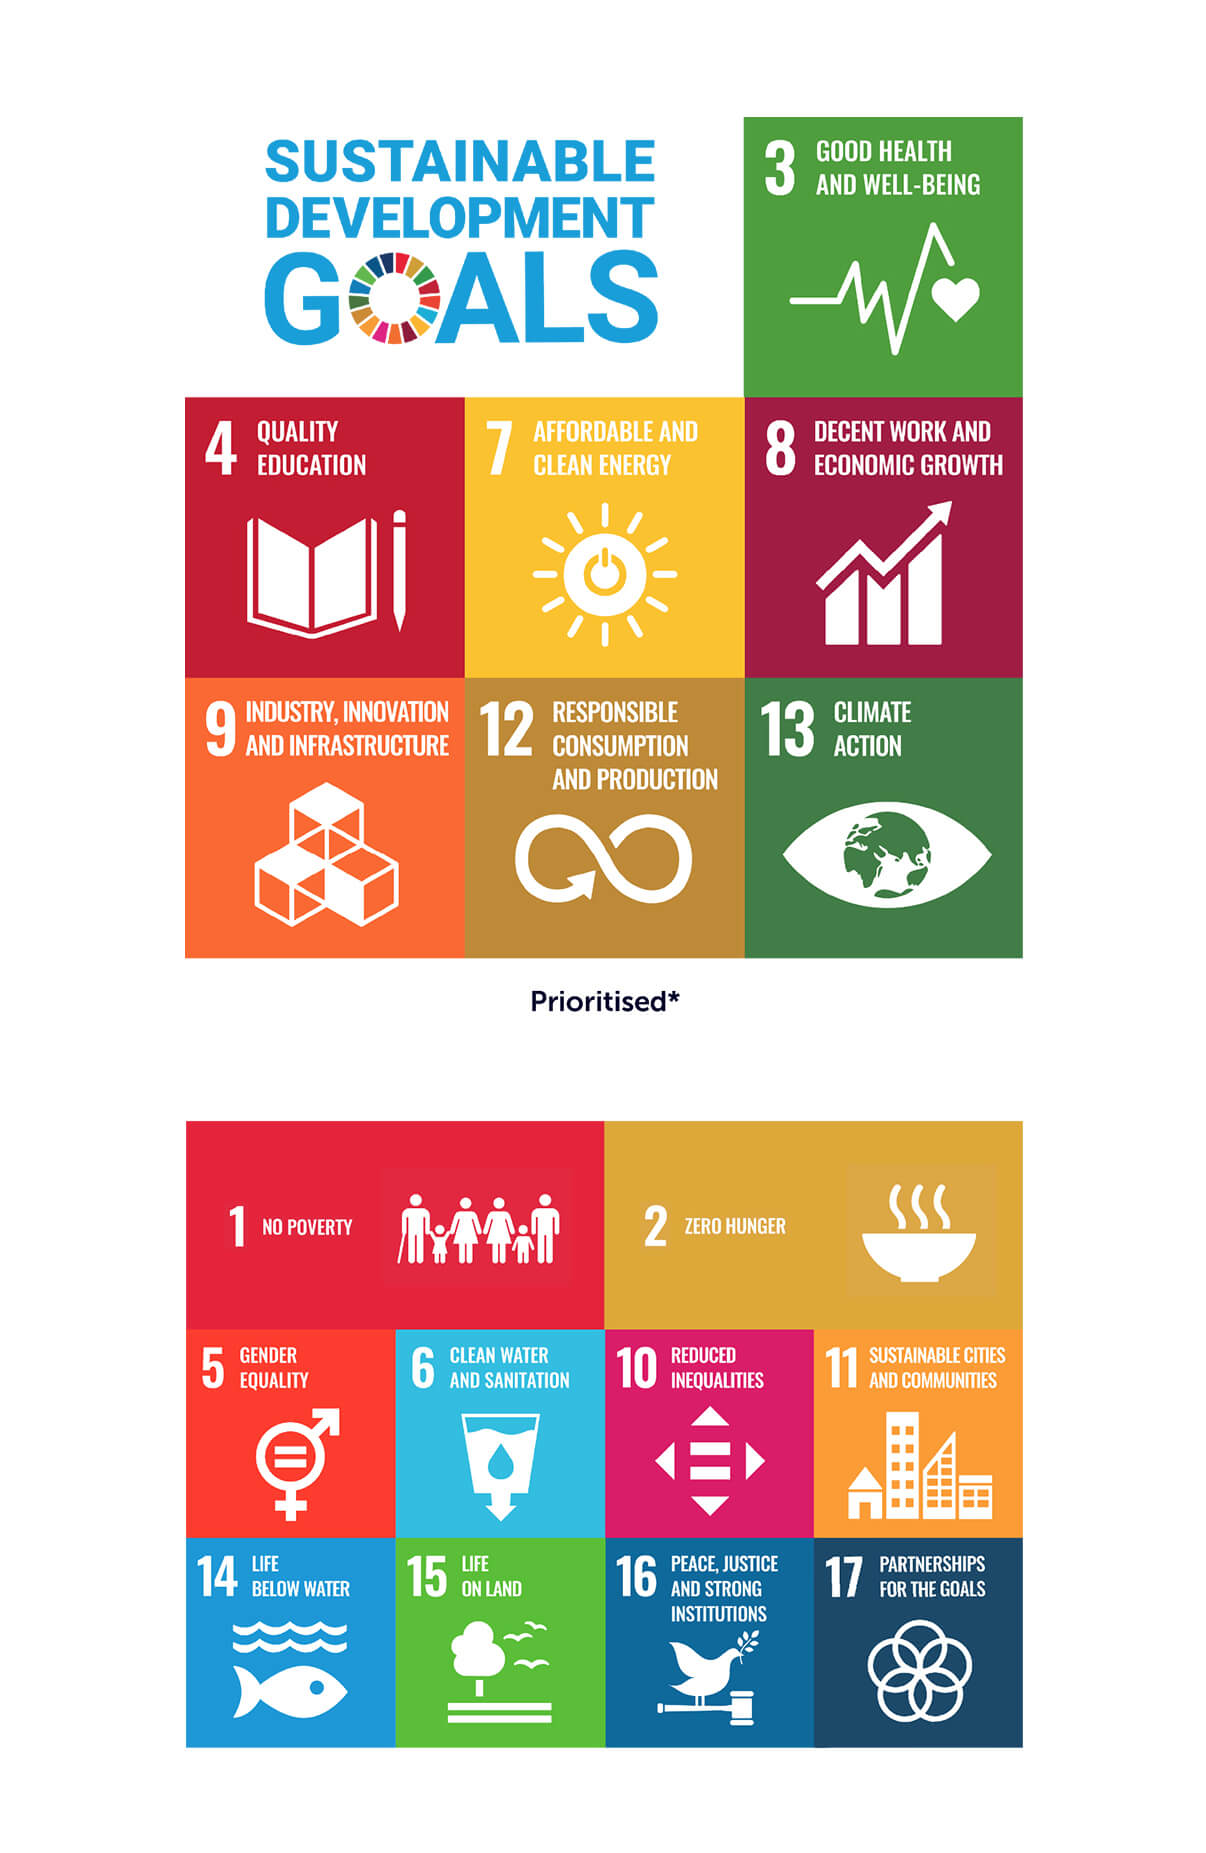 "United Nations Development Goals"